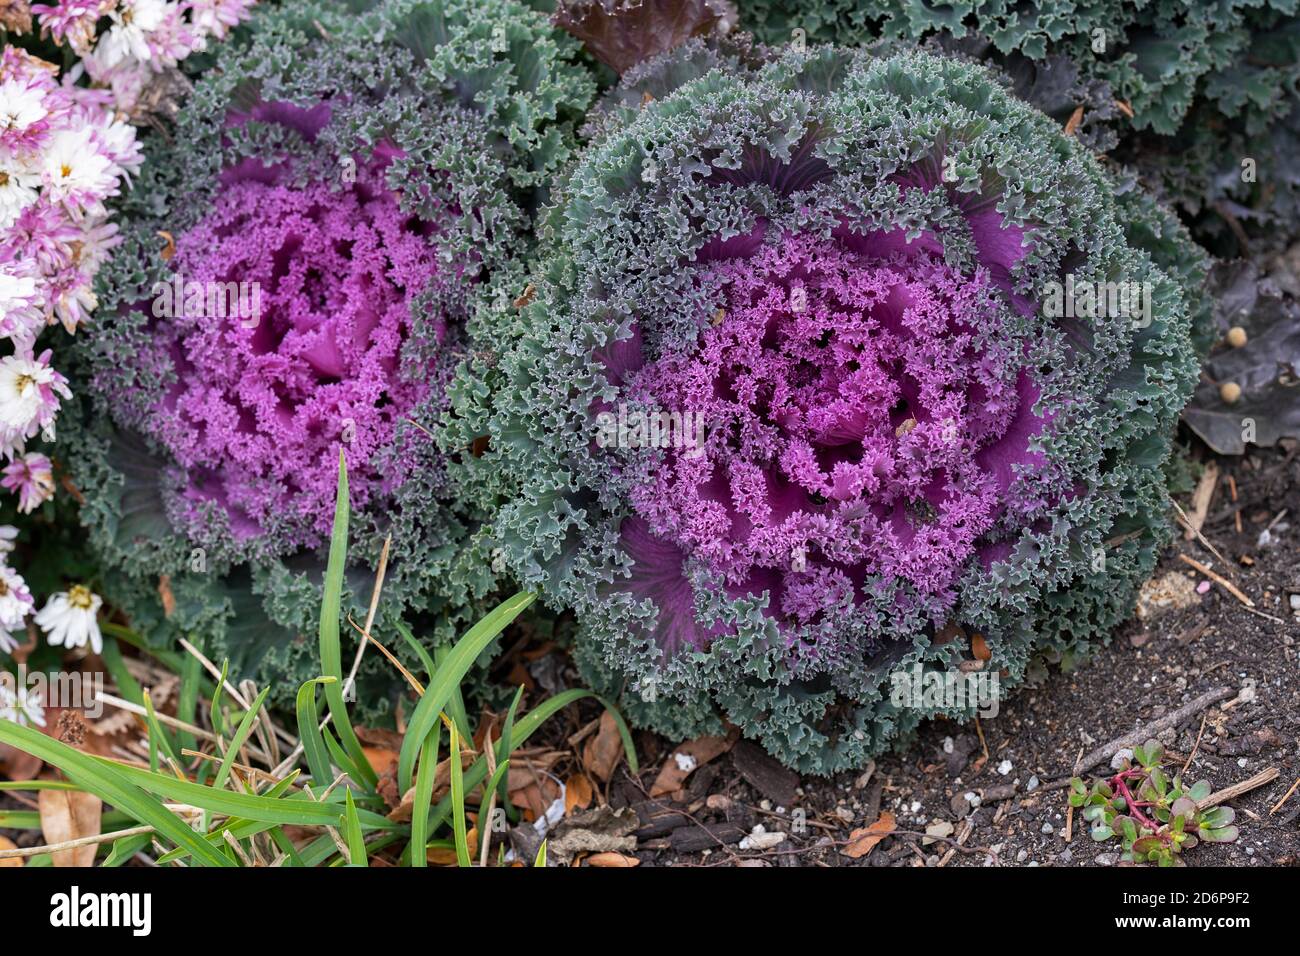 Porpora Nagoya Rosso o Nagoya Rosa, Ornamental fioritura Kale, Brassica oleracea che cresce all'esterno nel giardino Foto Stock